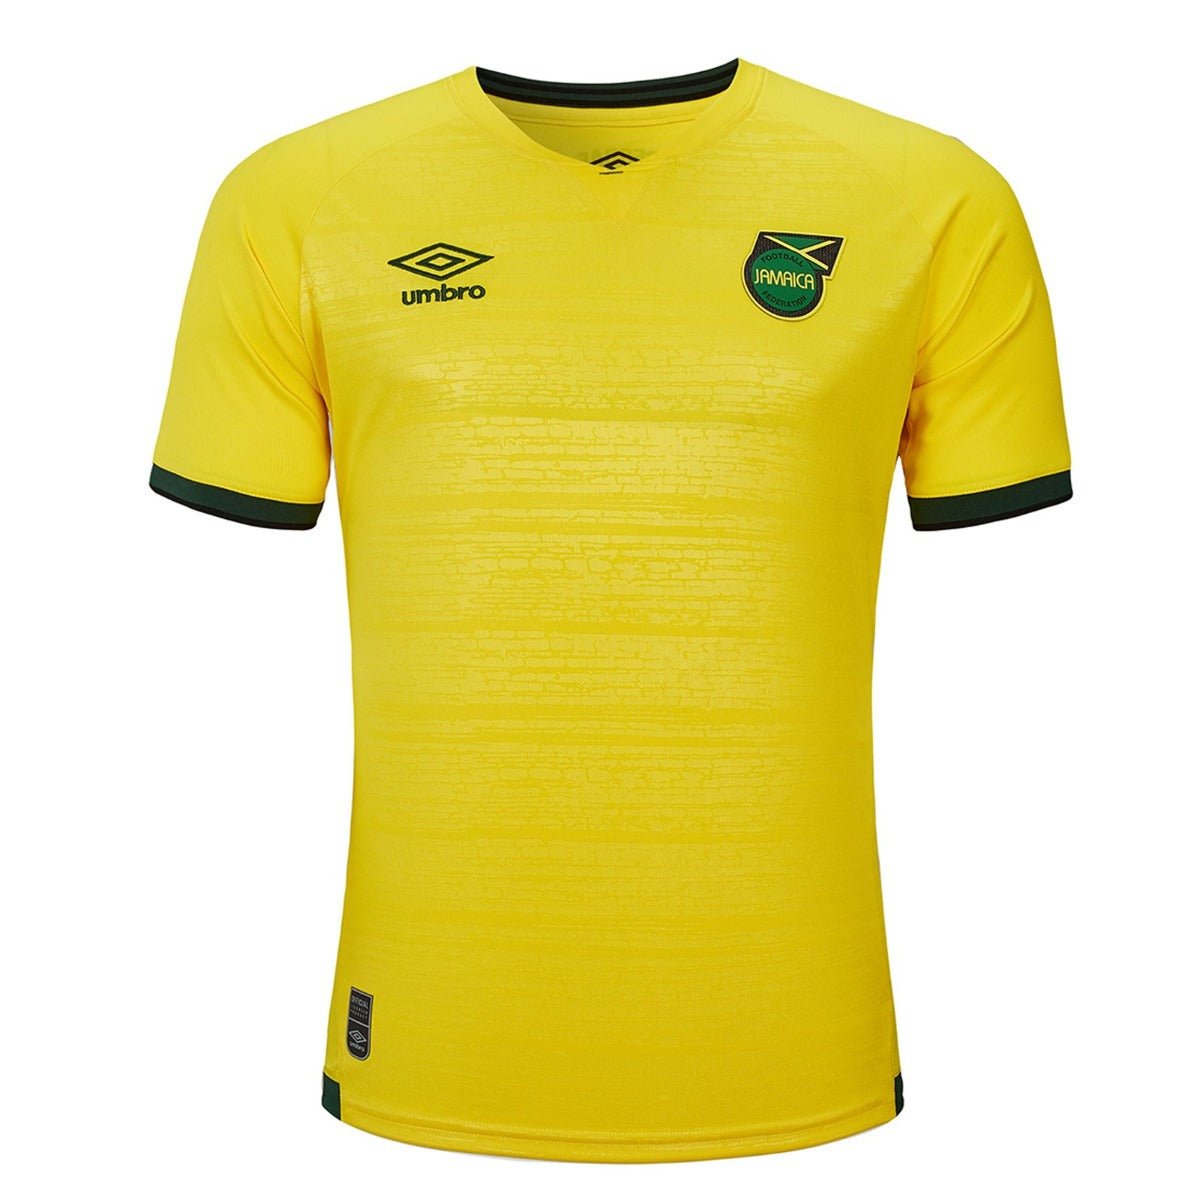 Umbro 2021-22 Jamaica Home Jersey - Yellow (Front)